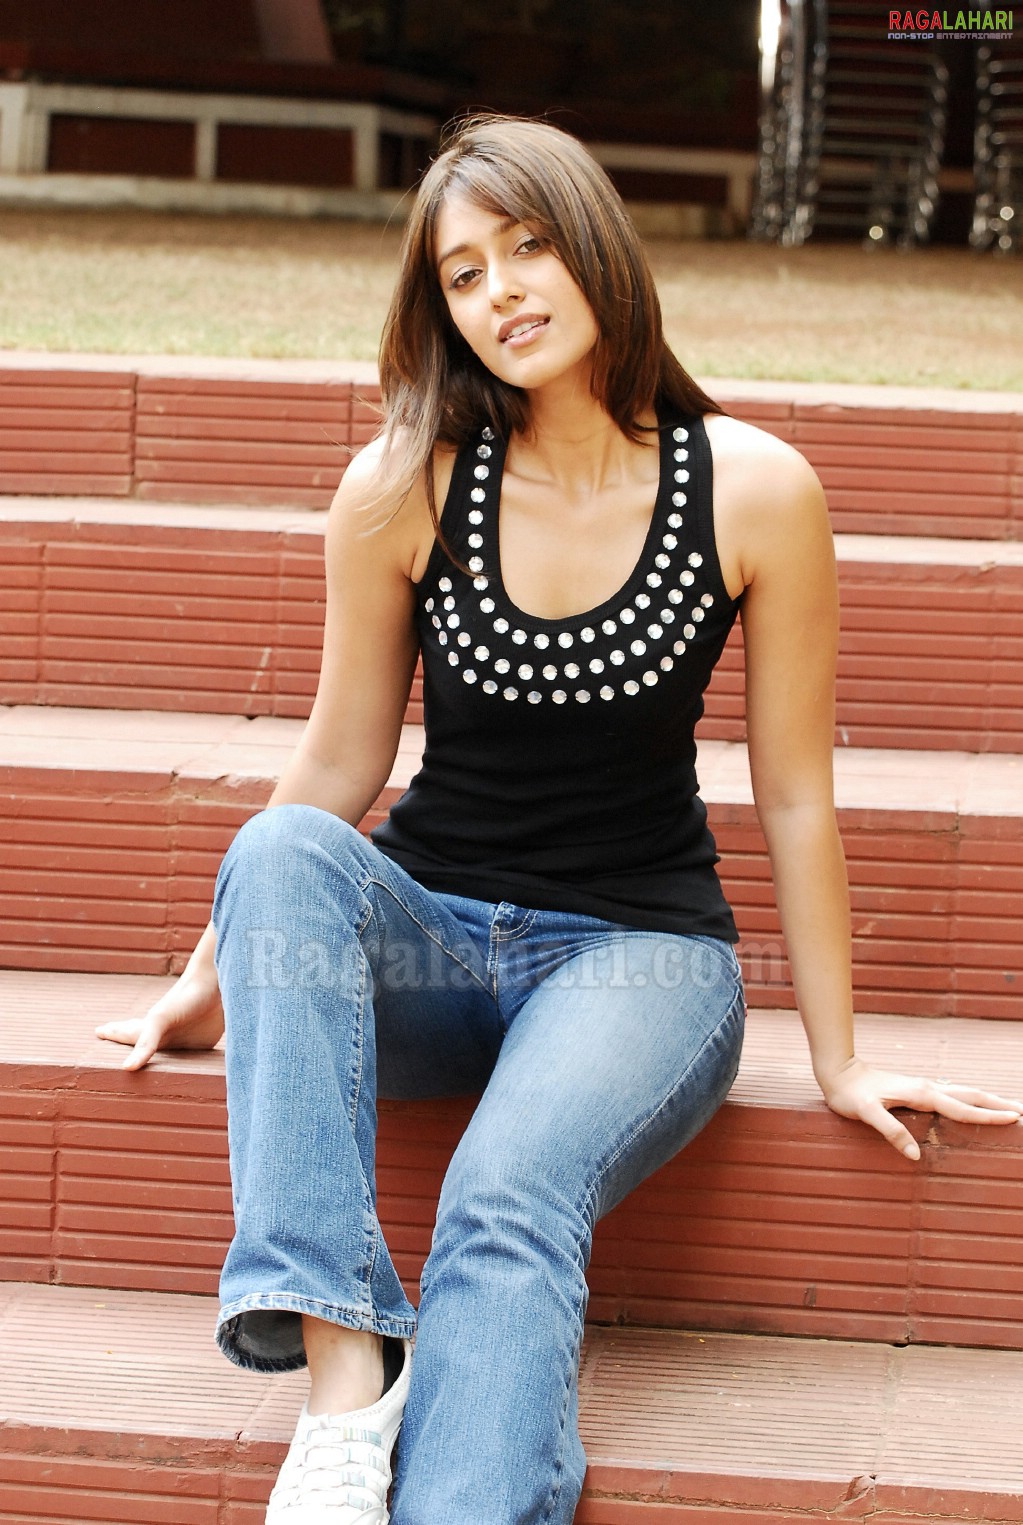 Ileana D'Cruz Photos in Tight Jeans